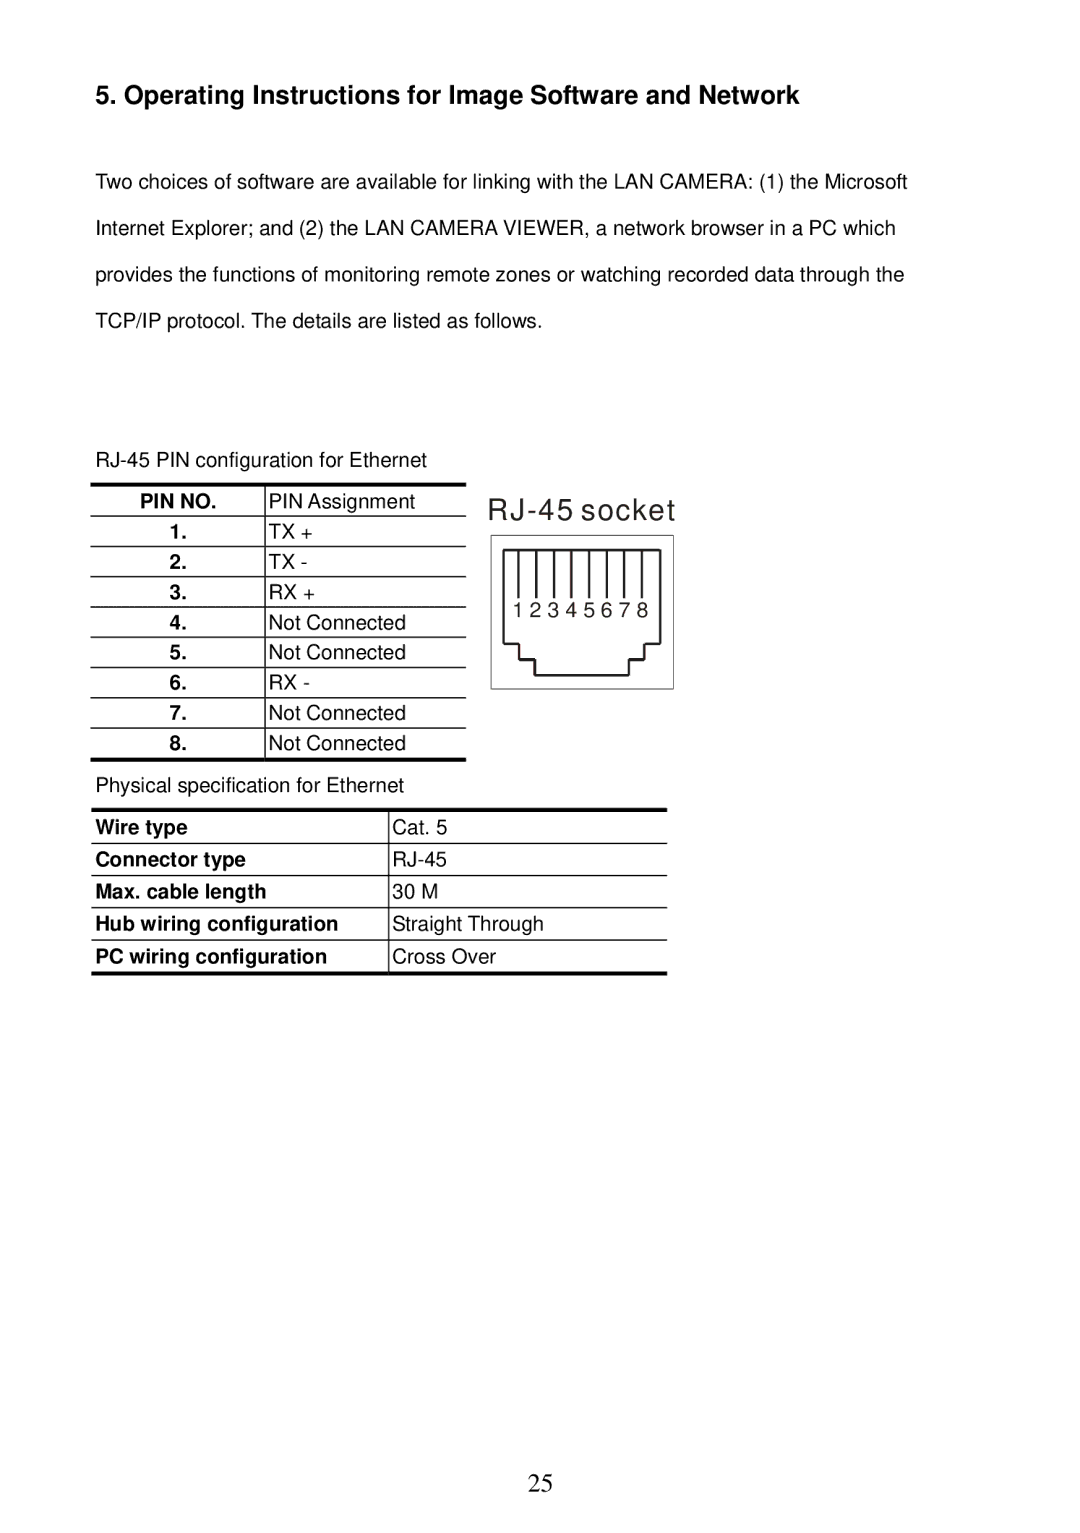 Sony MPEG4 LAN Camera operation manual RJ-45 socket 